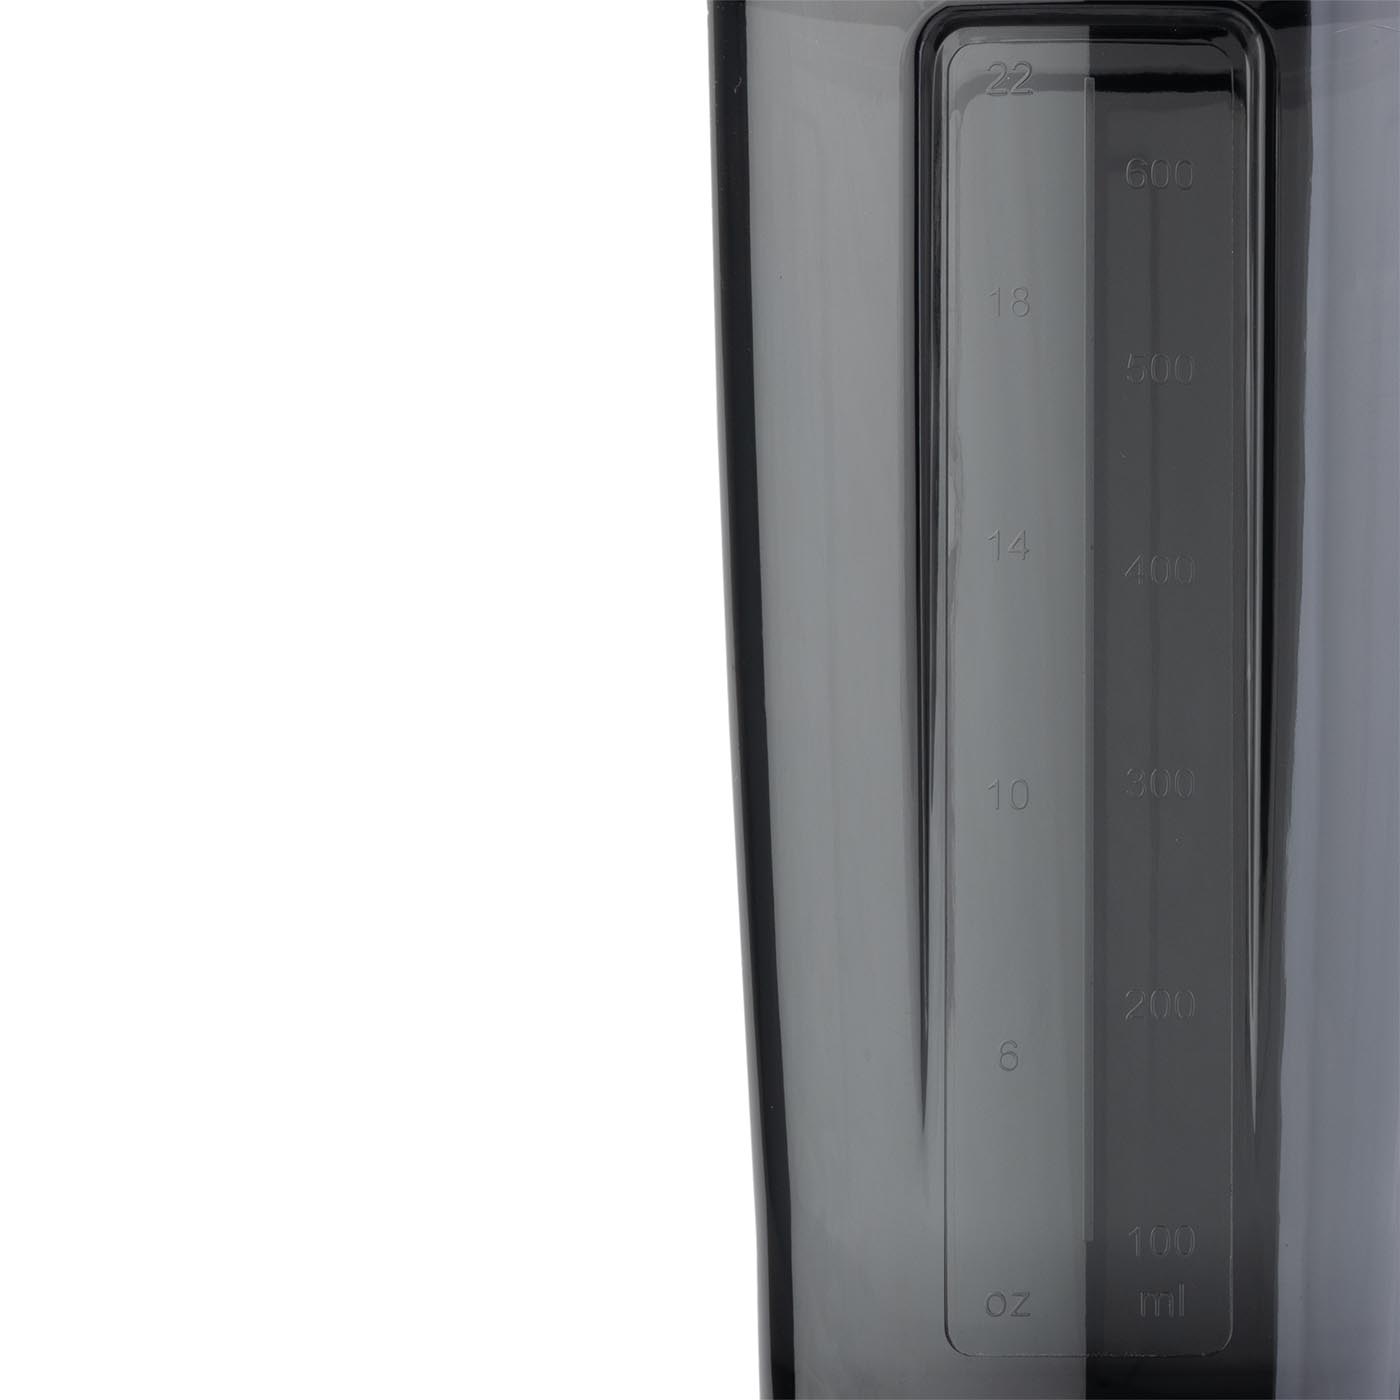 Star Wars Blender Bottle Mandalorian Pro Series 28 Oz. Shaker Cup NEW -  household items - by owner - housewares sale 